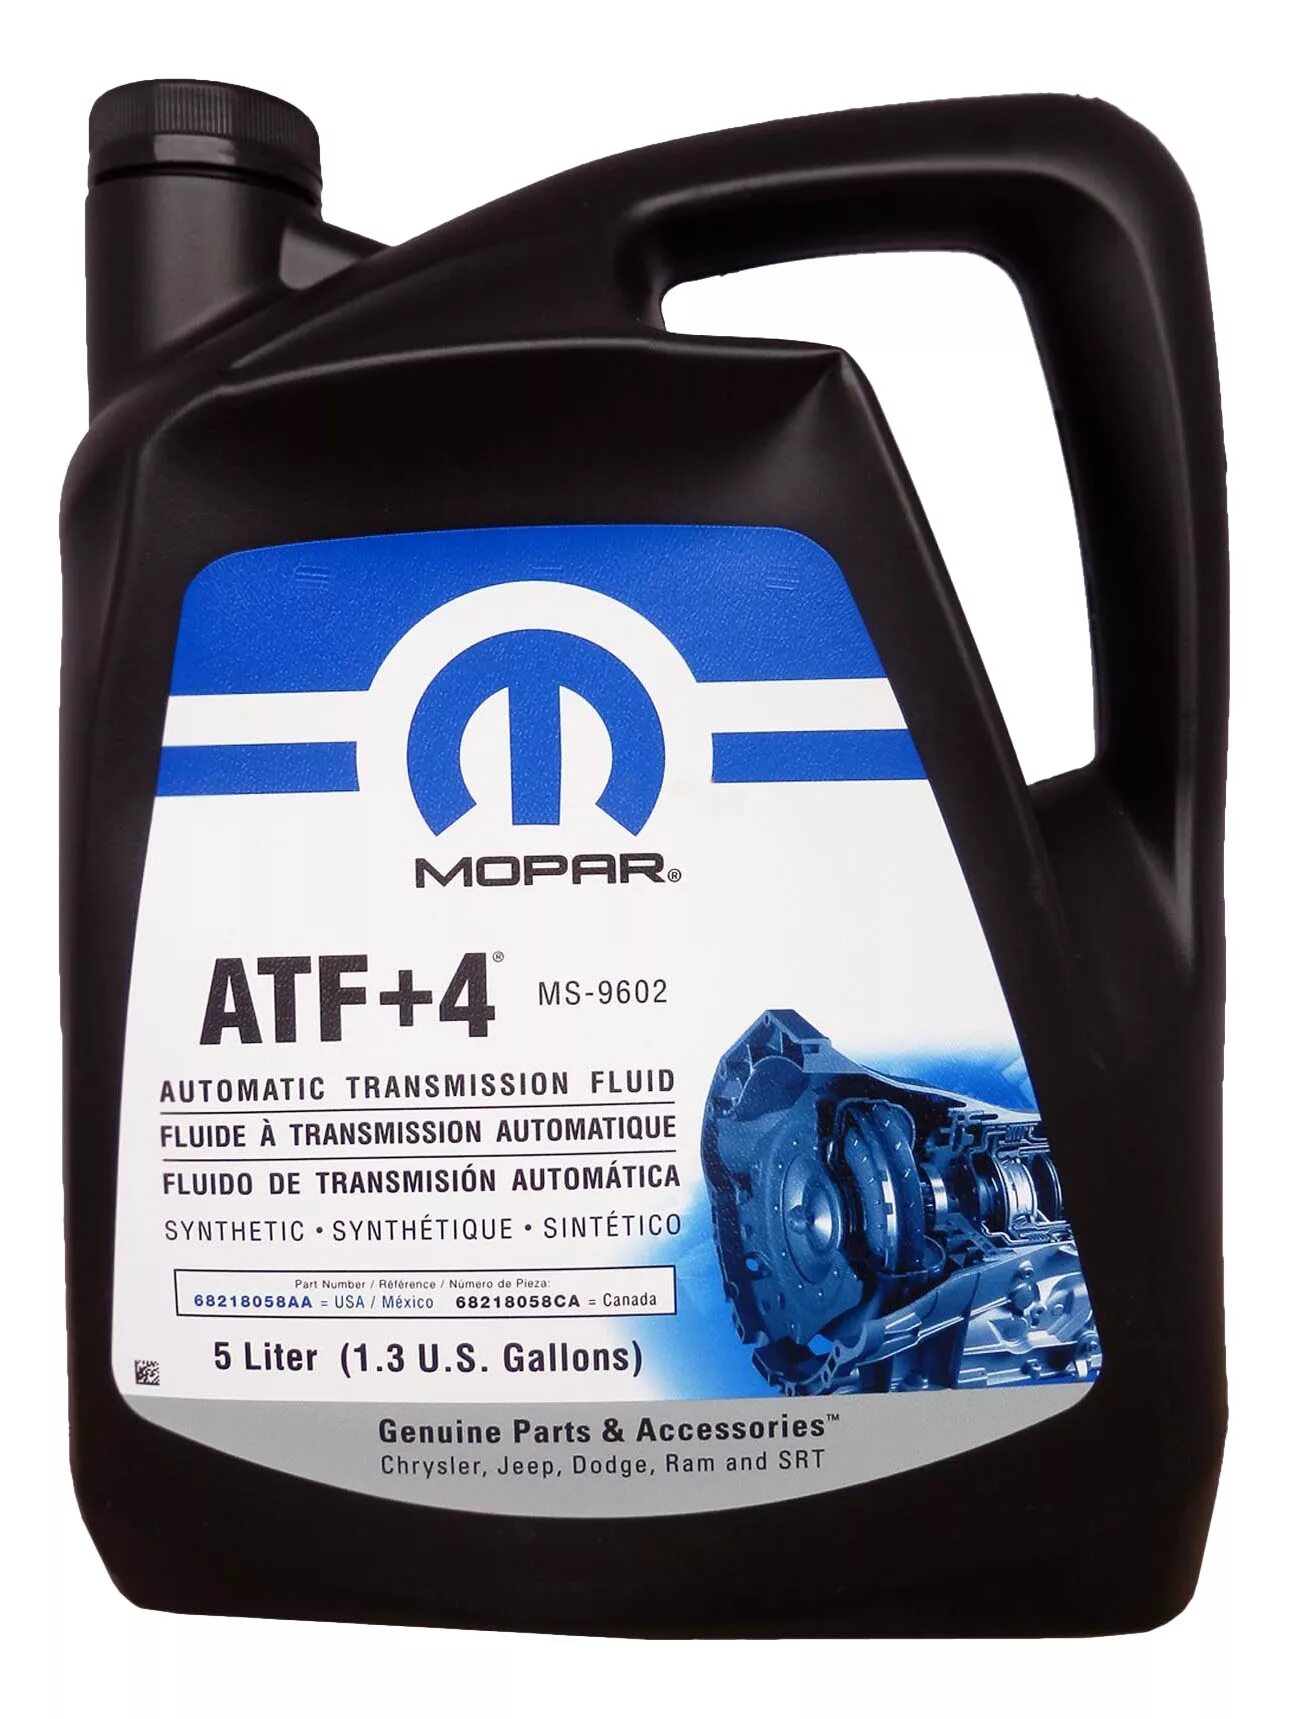 Atf 3 atf 4. Mopar ATF+4 (MS-9602). Mopar ATF+4 9602 артикул. Масло трансмиссионное мопар АТФ +4. 68218058aa Mopar.